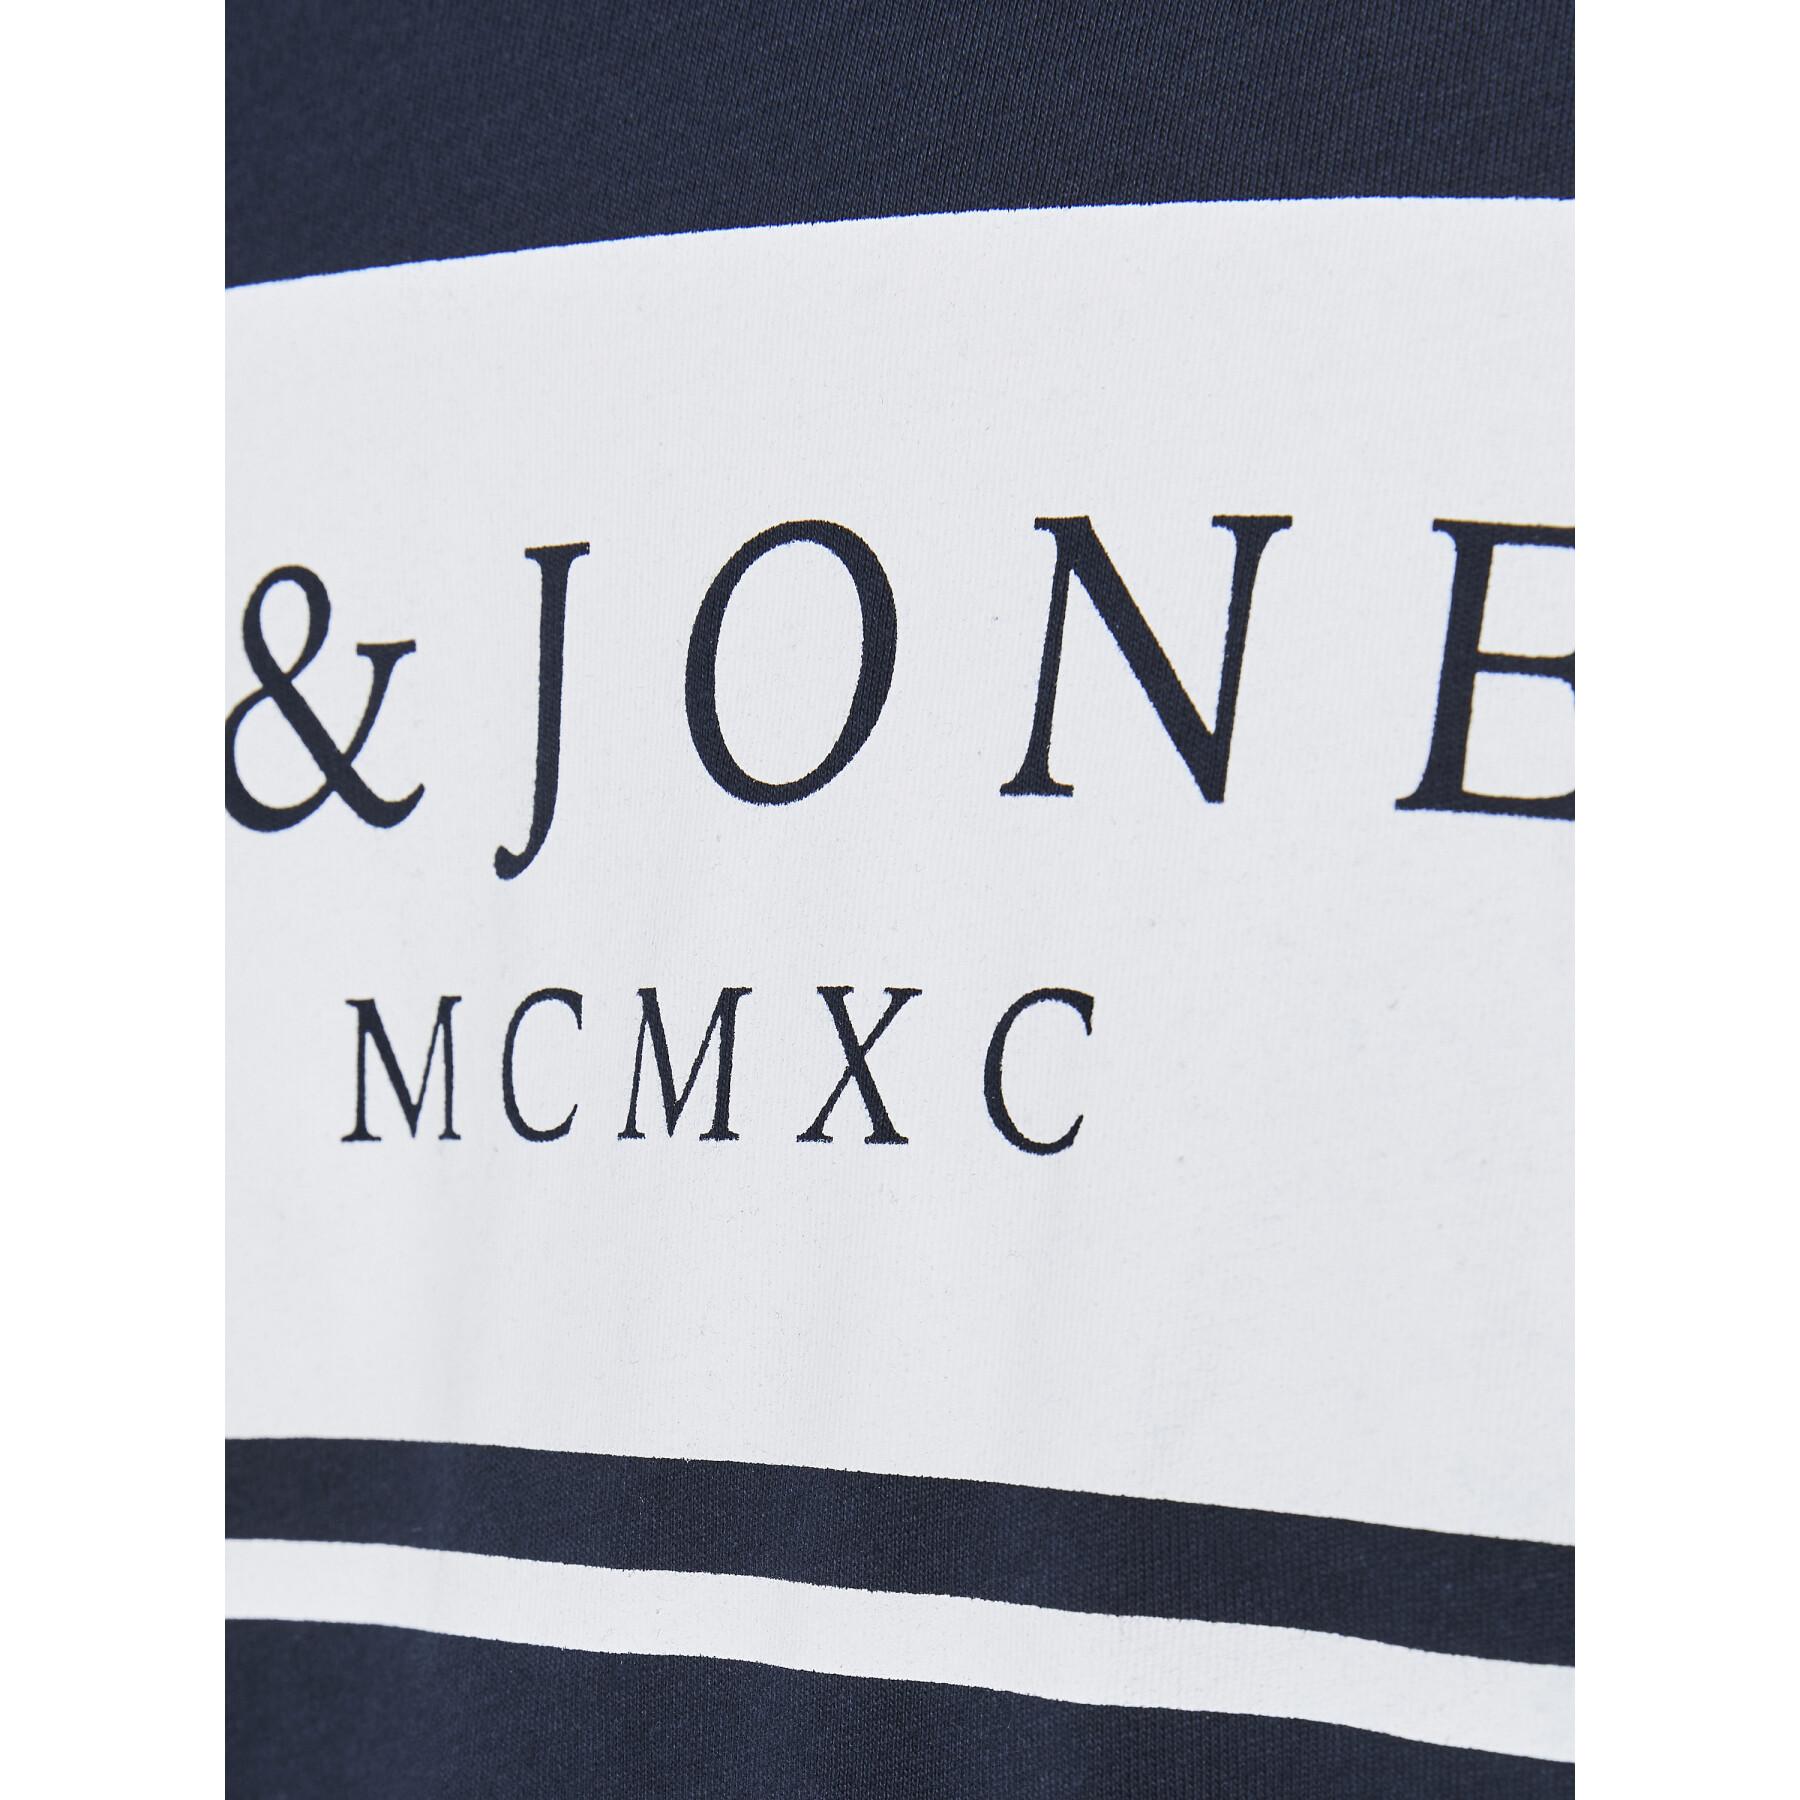 Camiseta mangas cortas Jack & Jones Jjriver